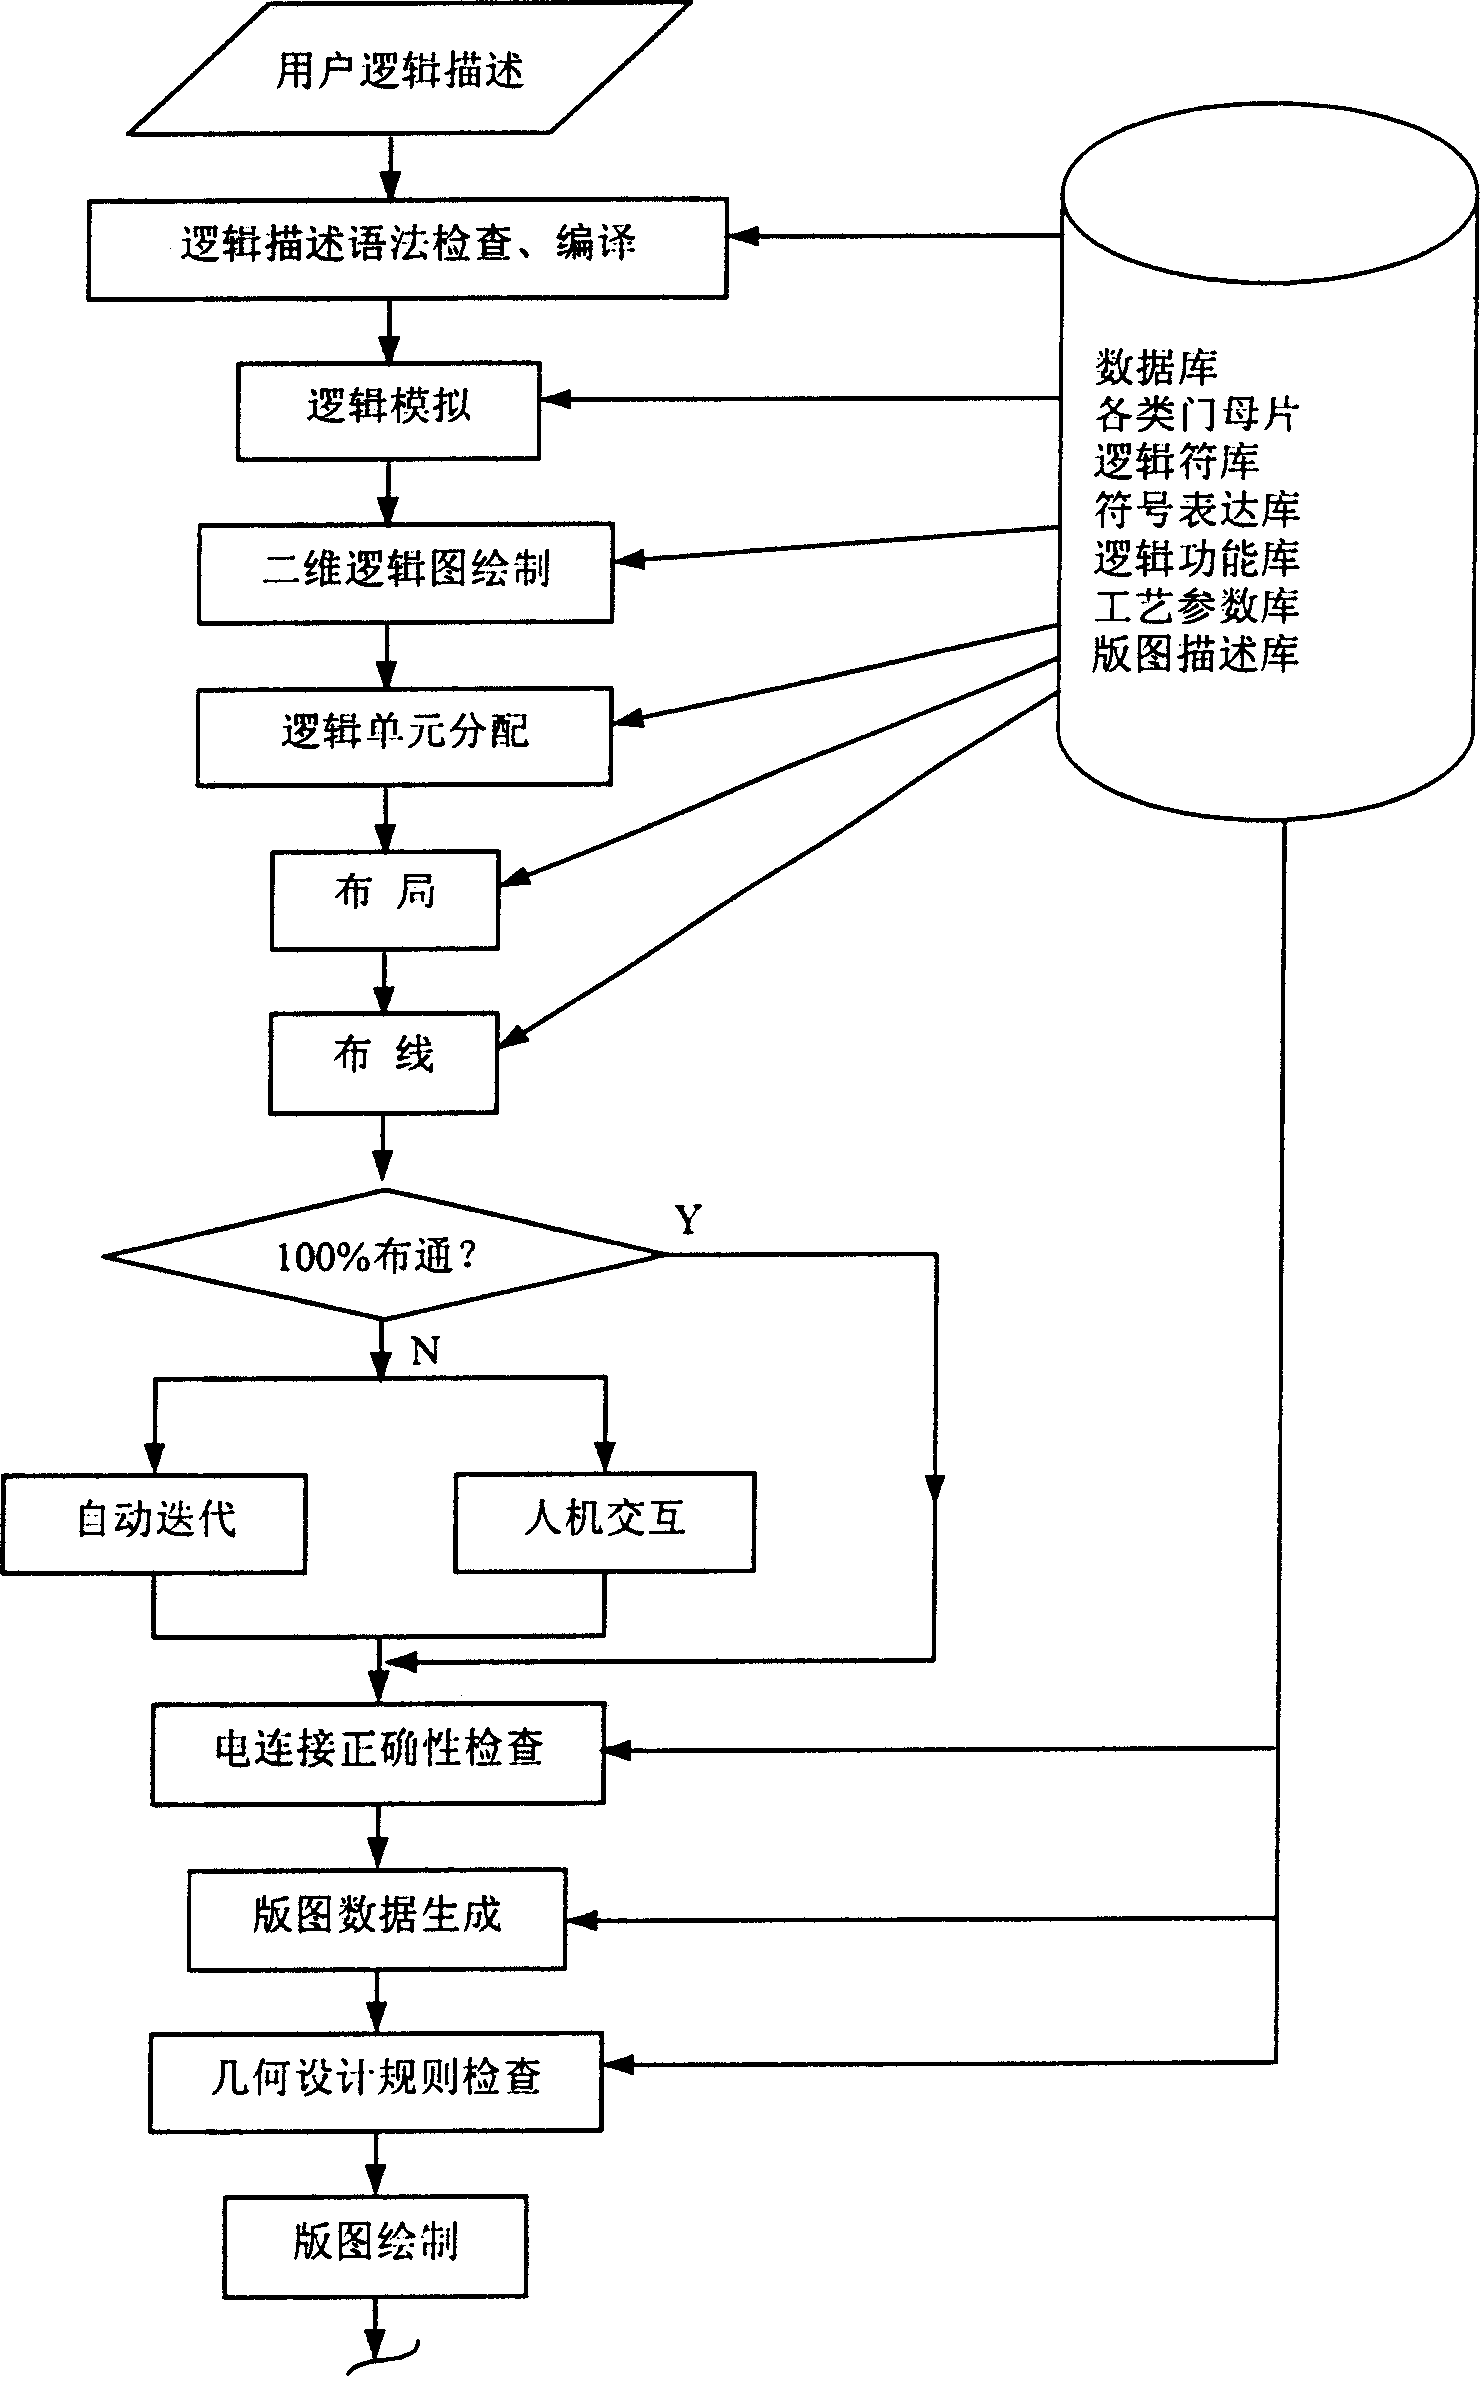 Bidirectional technique system of integrated circuit design